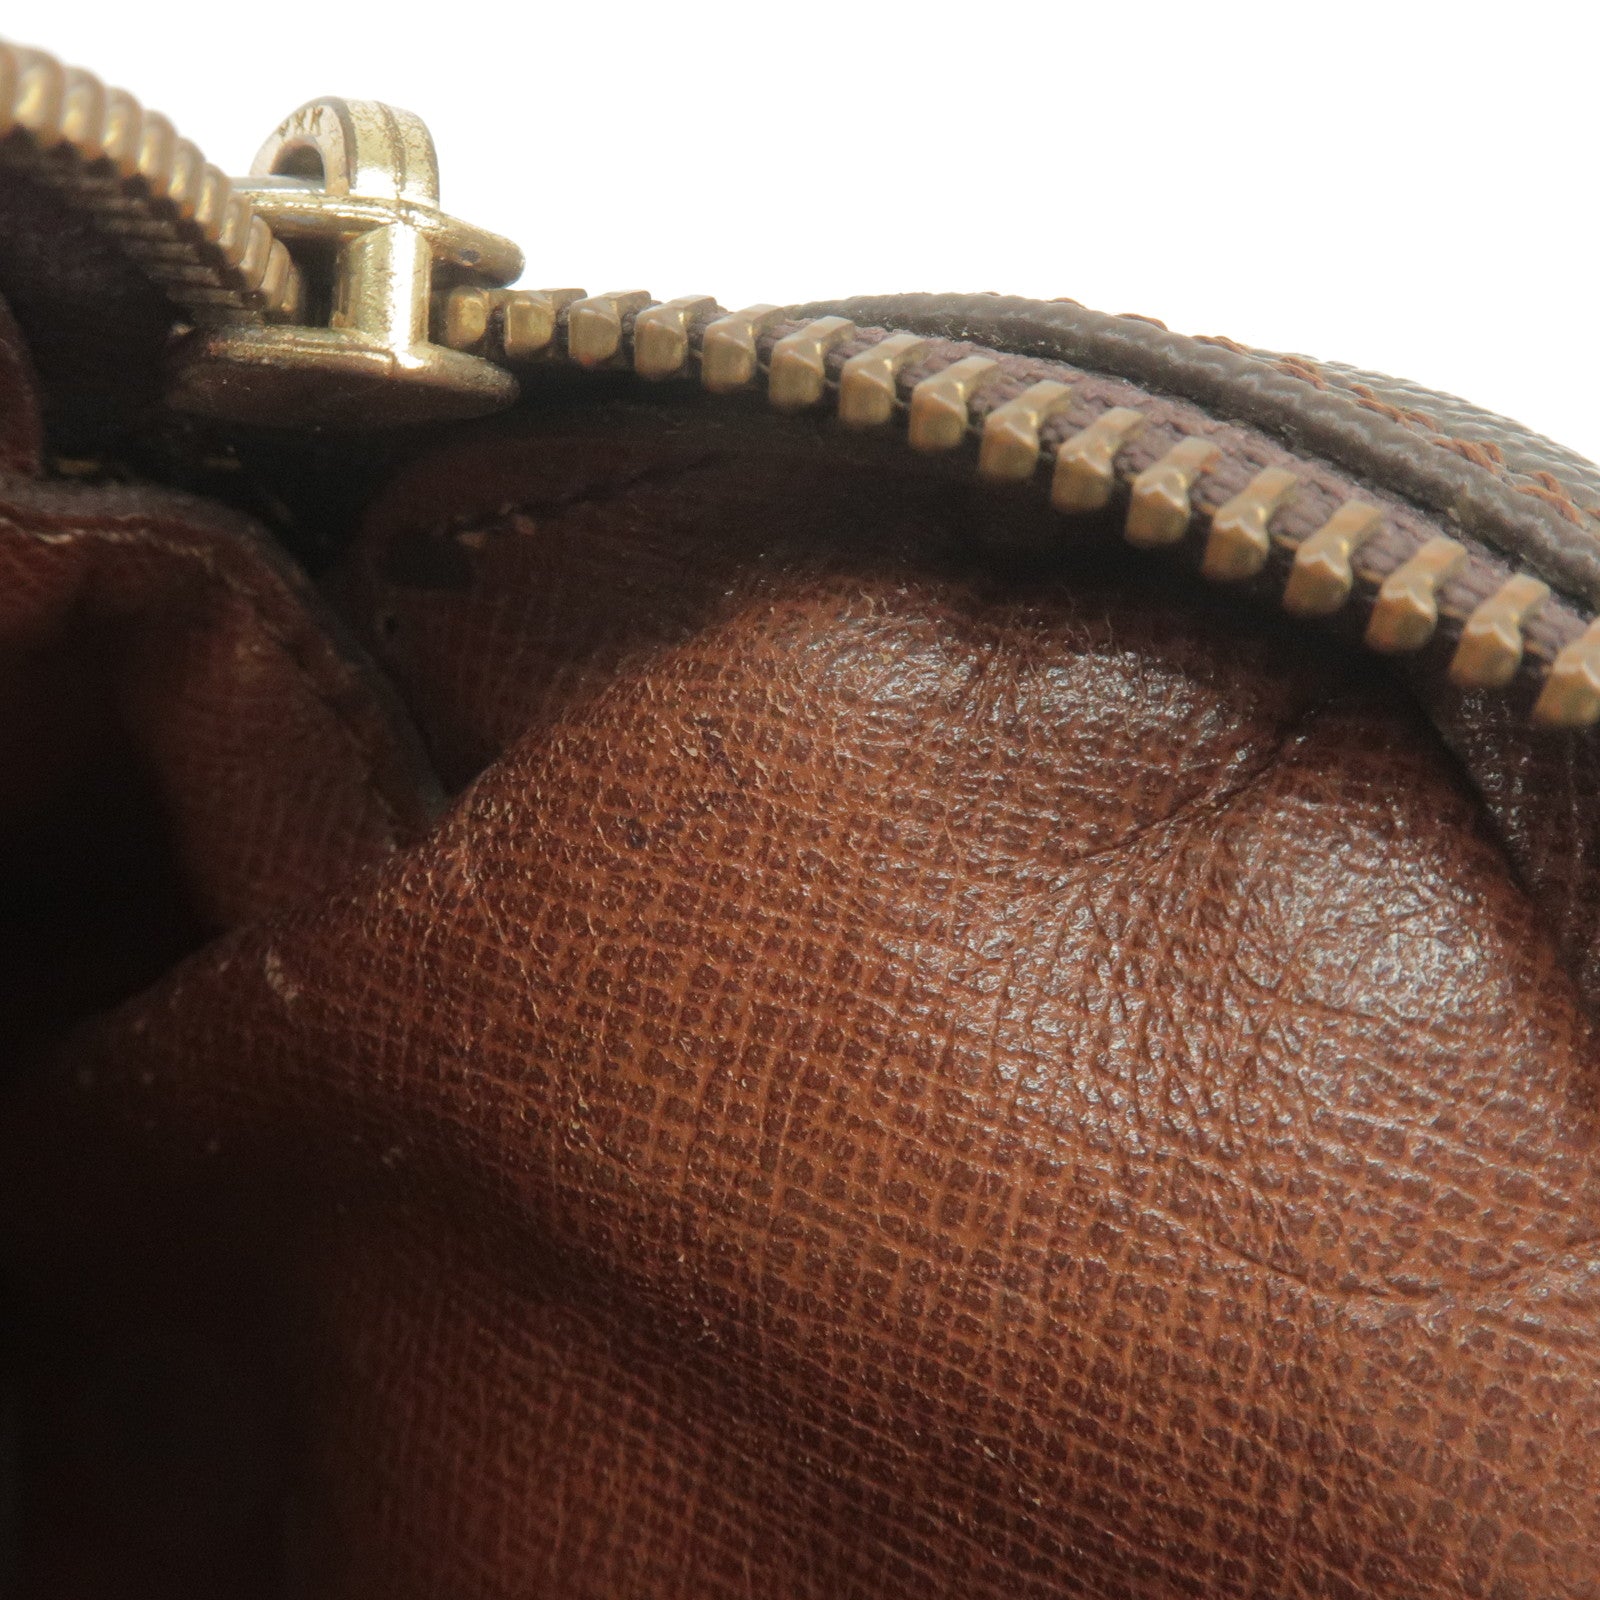 Louis Vuitton Keepall Bandouliere Vachetta Bag Strap – I MISS YOU VINTAGE